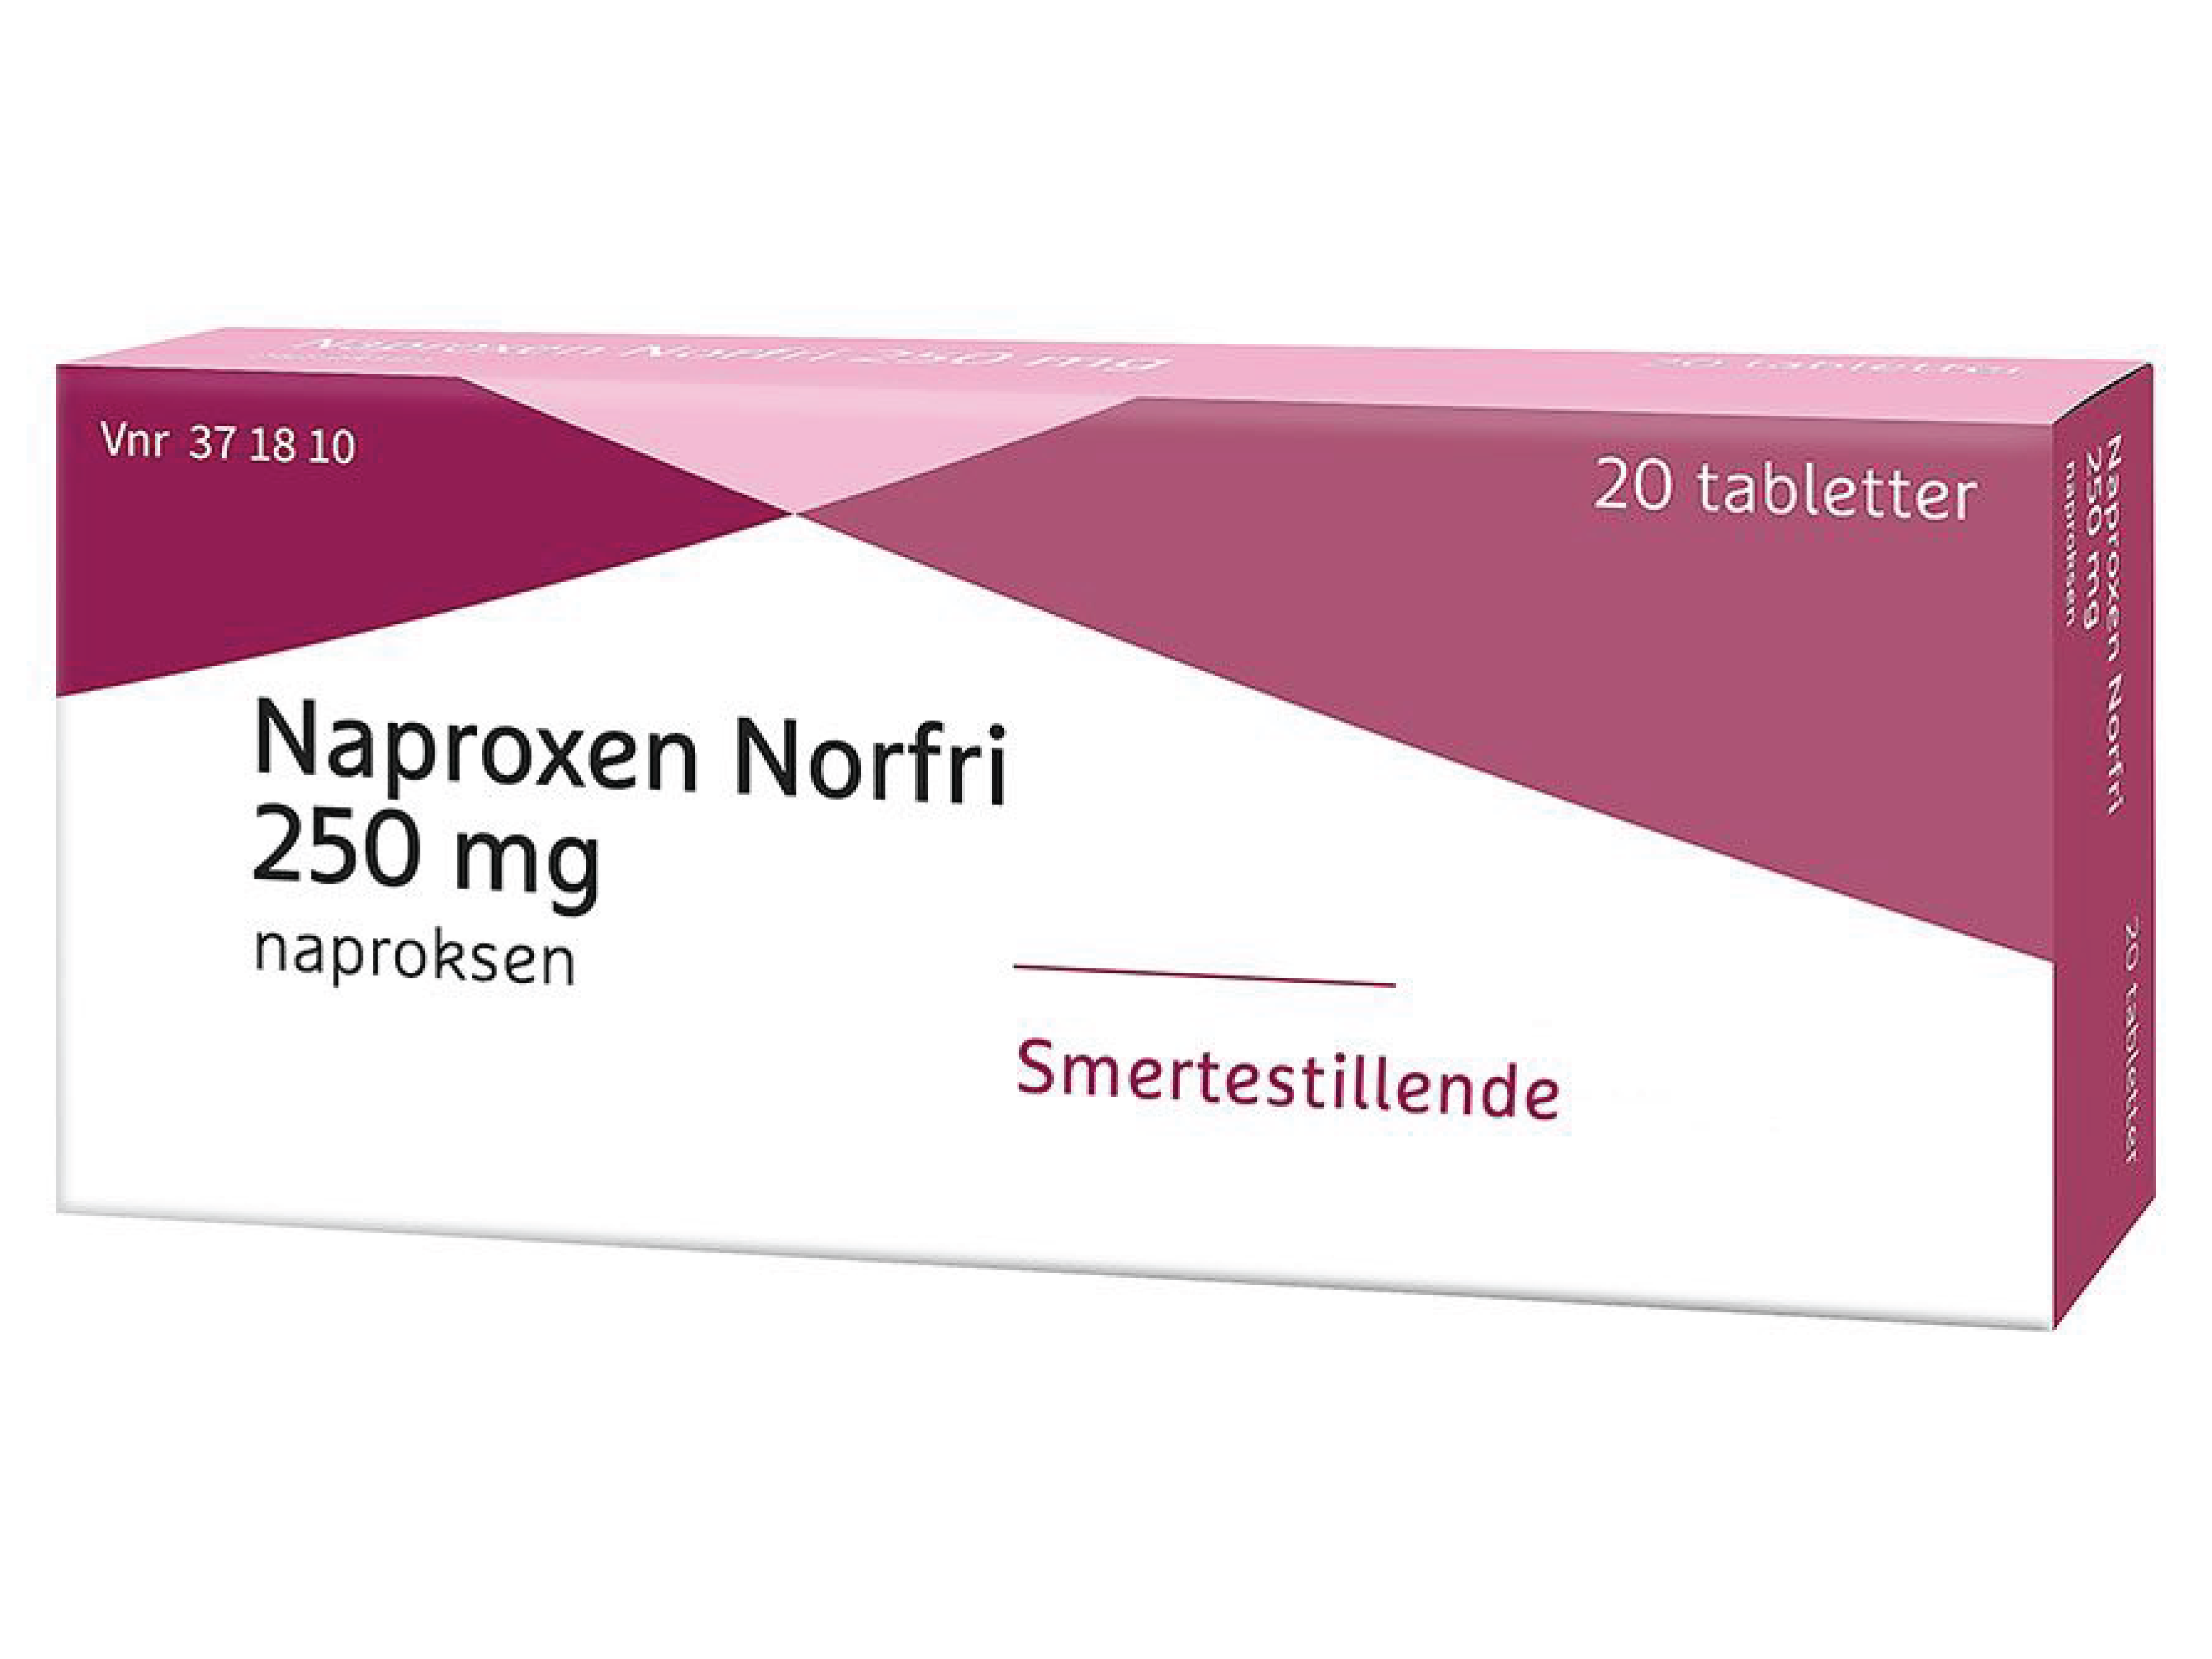 Naproxen Norfri 250 mg tabletter, 20 stk.